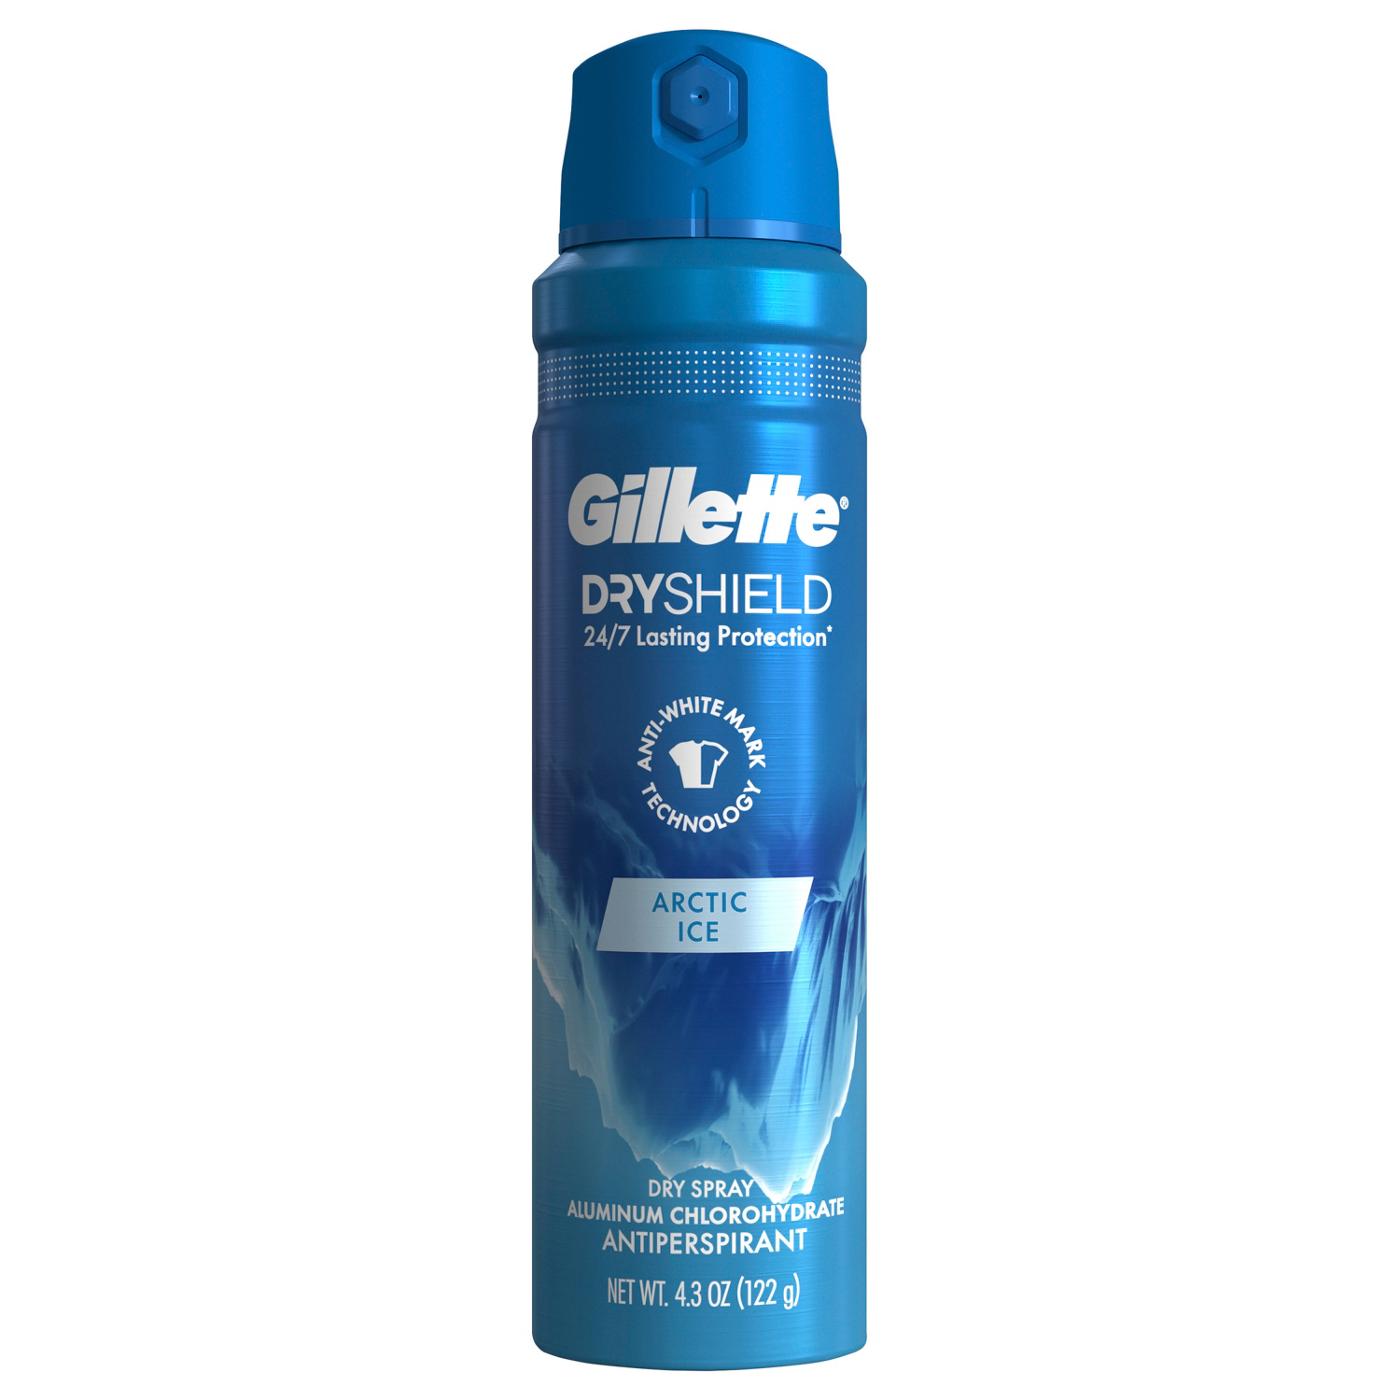 Gillette DryShield Antiperspirant - Arctic Ice; image 1 of 2